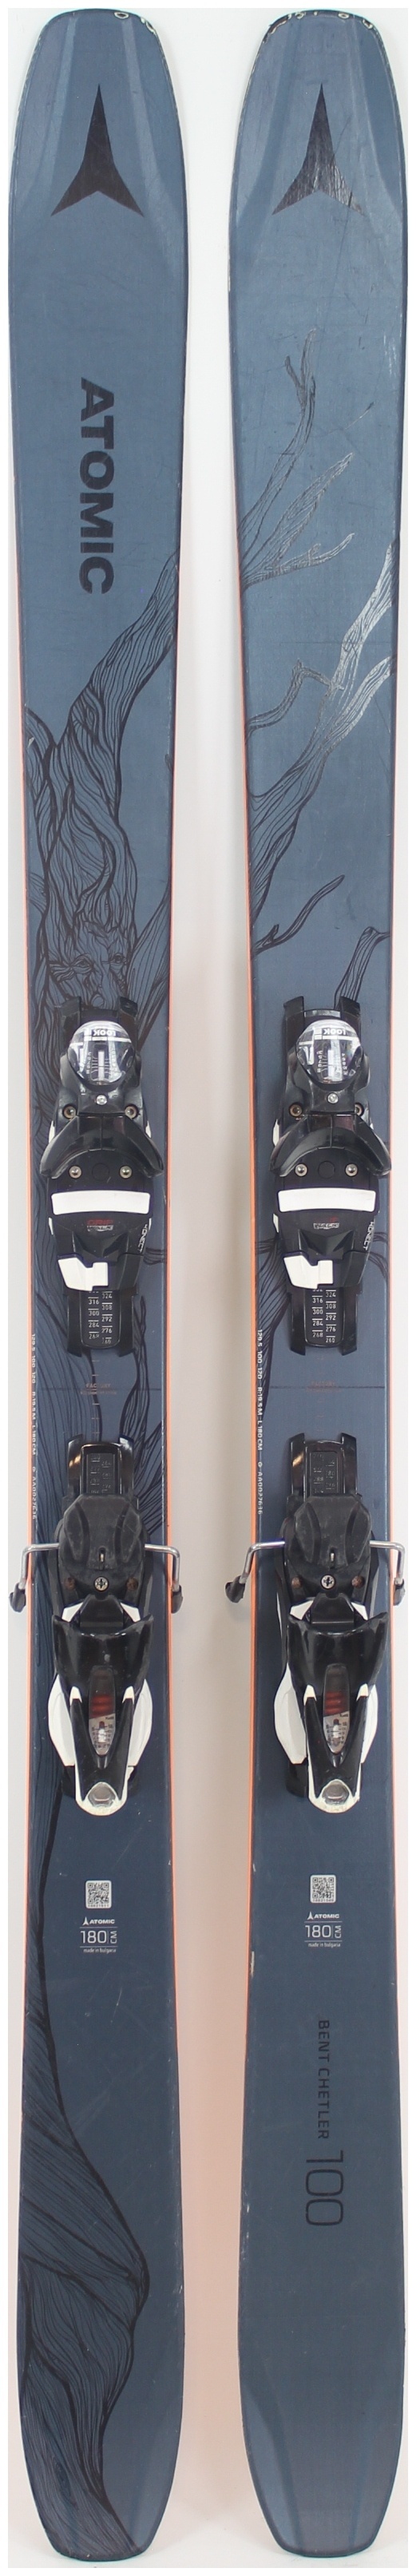 2020 Atomic Bent Chetler 100 180cm Used Demo Skis on Sale - Powder7